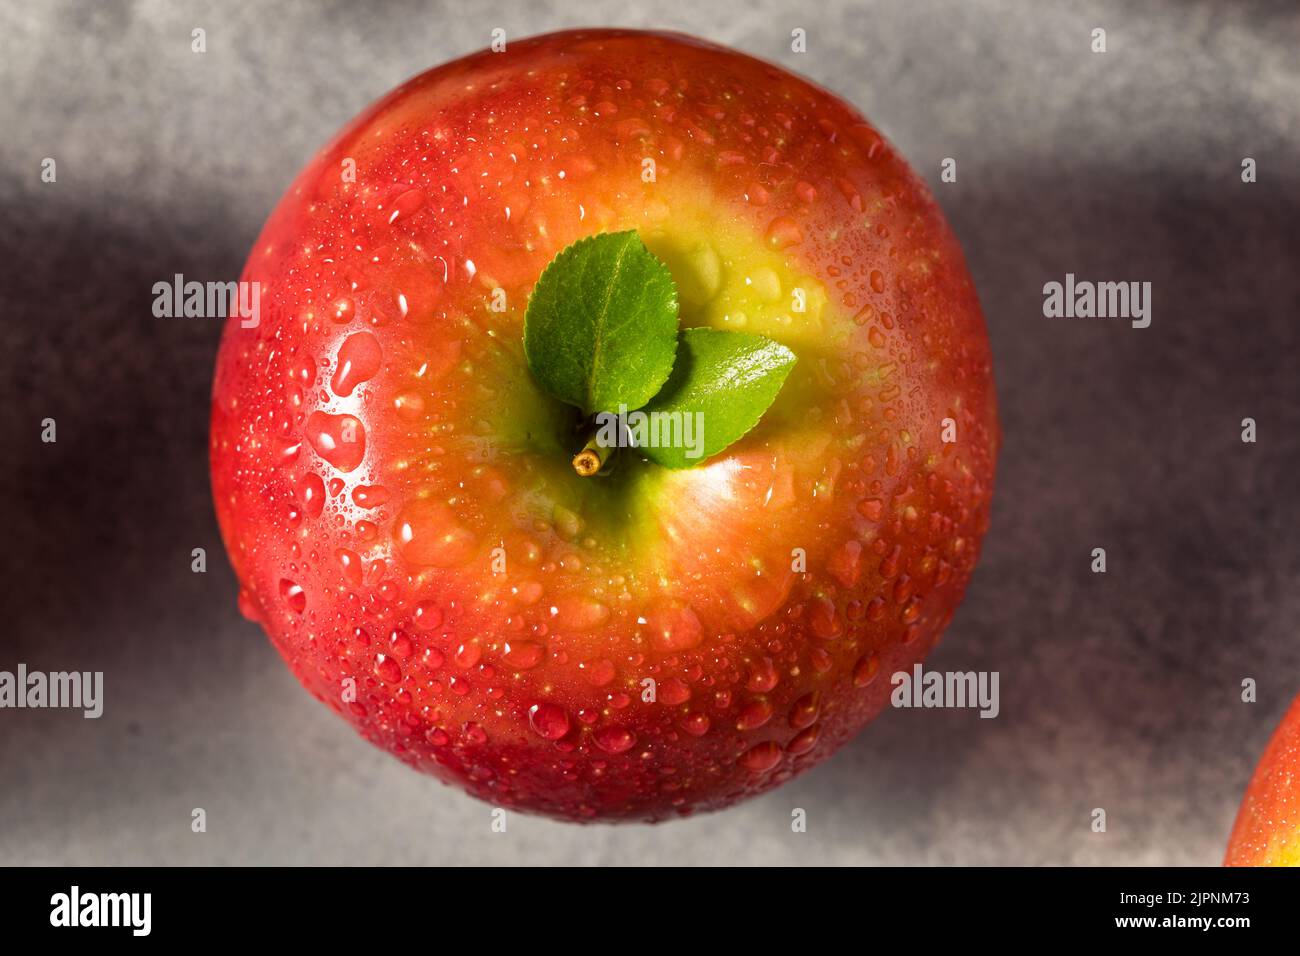 https://c8.alamy.com/comp/2JPNM73/raw-red-organic-cosmic-crisp-apples-in-a-bunch-2JPNM73.jpg